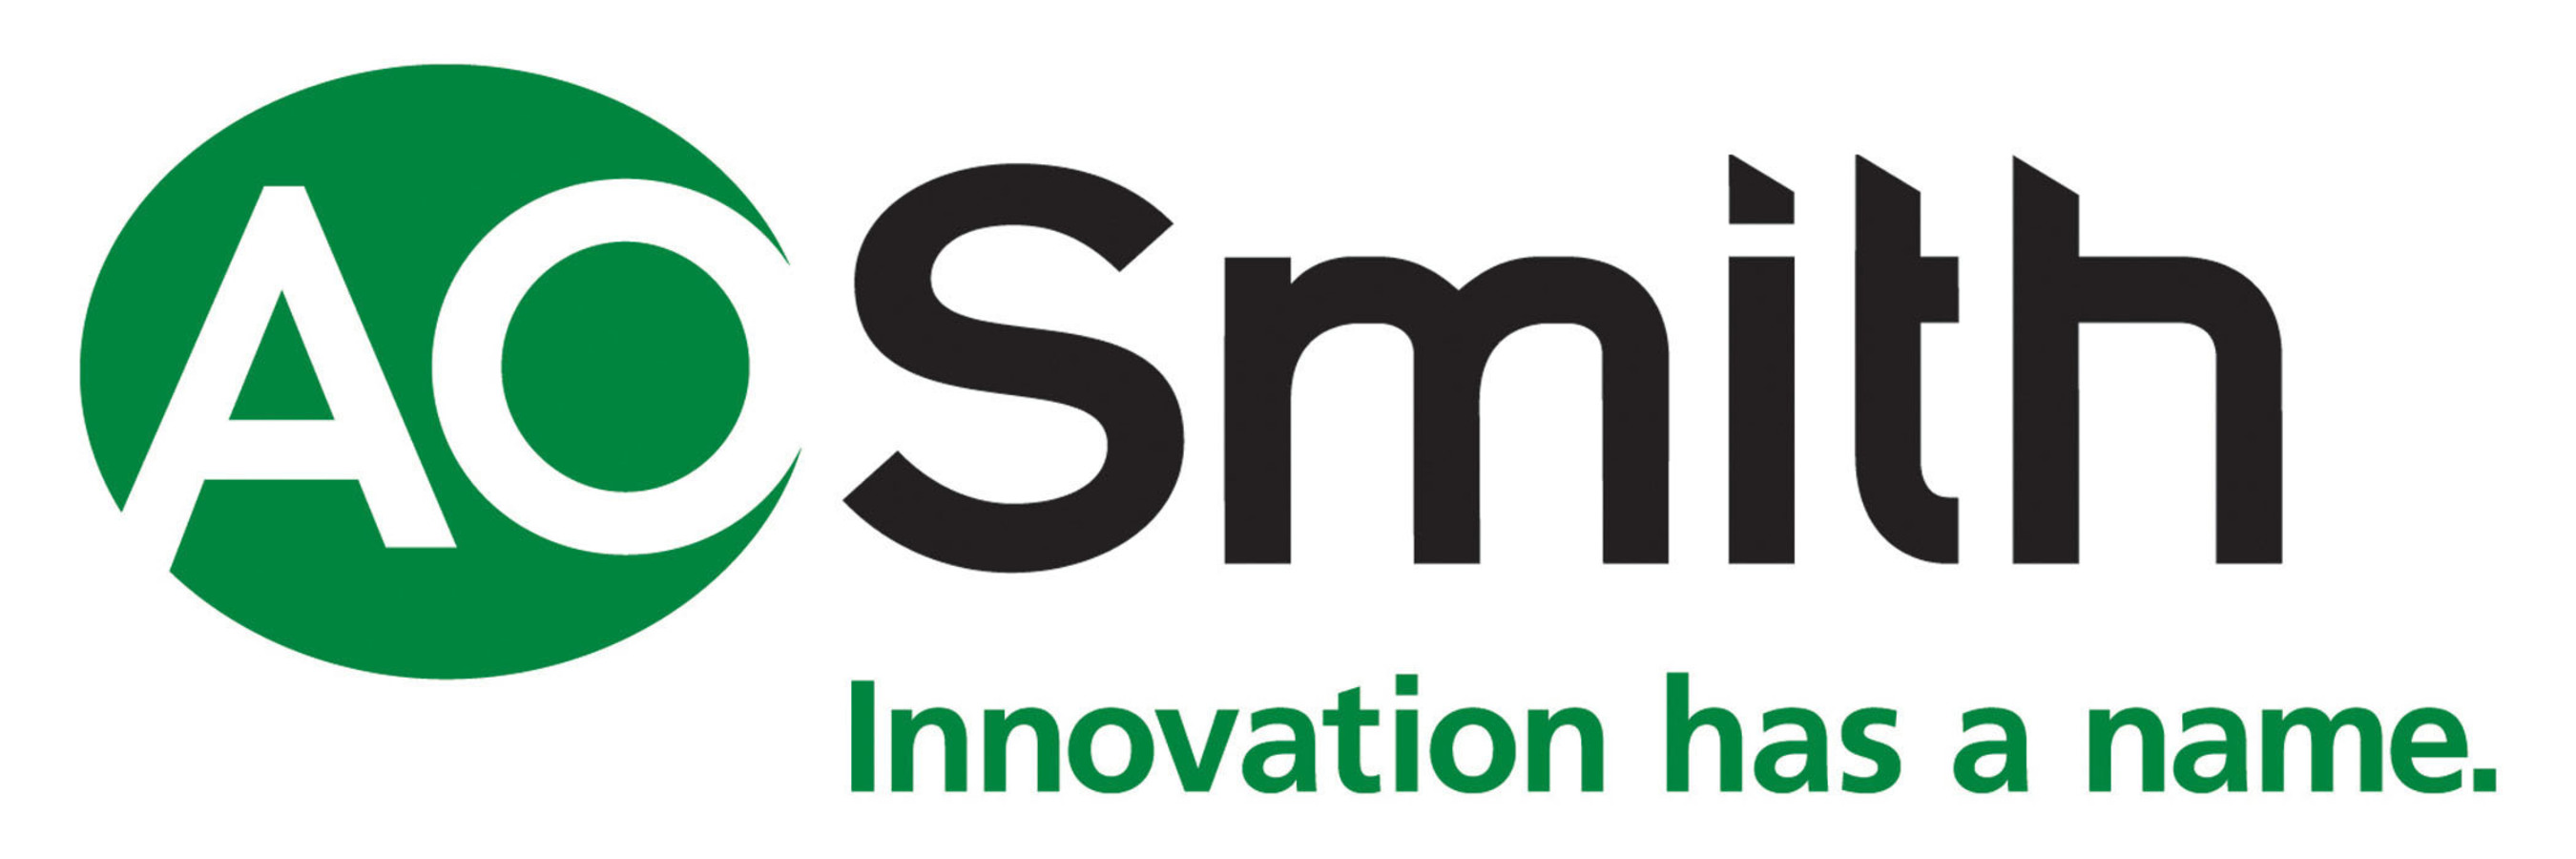 A. O. Smith Corporation logo. (PRNewsFoto/A. O. Smith Corporation) (PRNewsFoto/A. O. Smith Corporation)